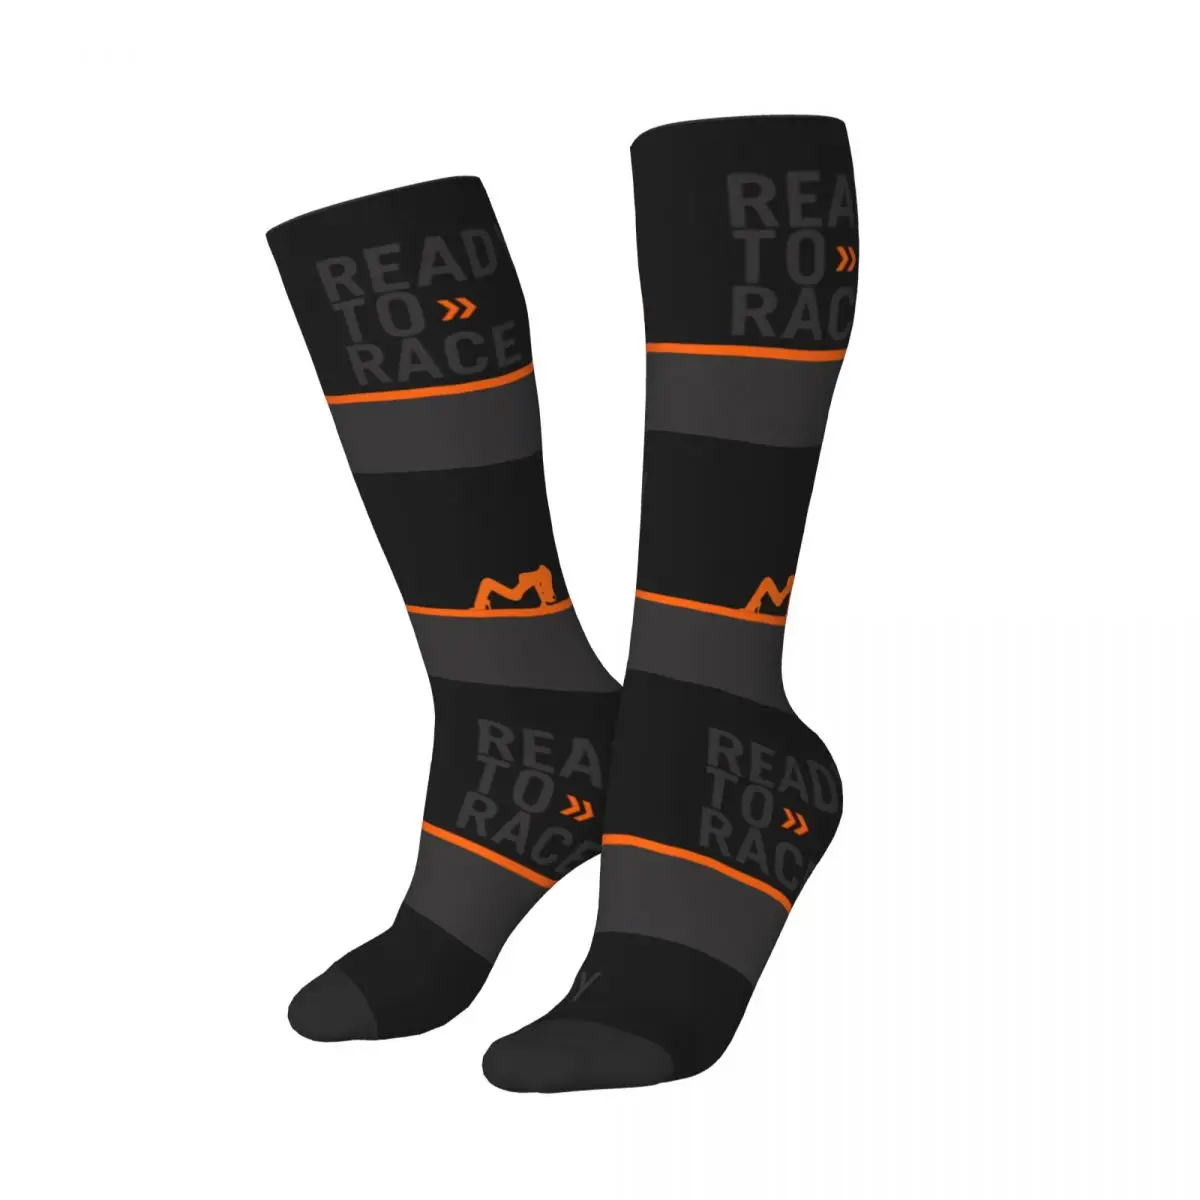 

Long Socks Motor Ready To Race Accessories for Male Sweat Absorbing Printed Socks Below Knee All Season Wonderful Gifts